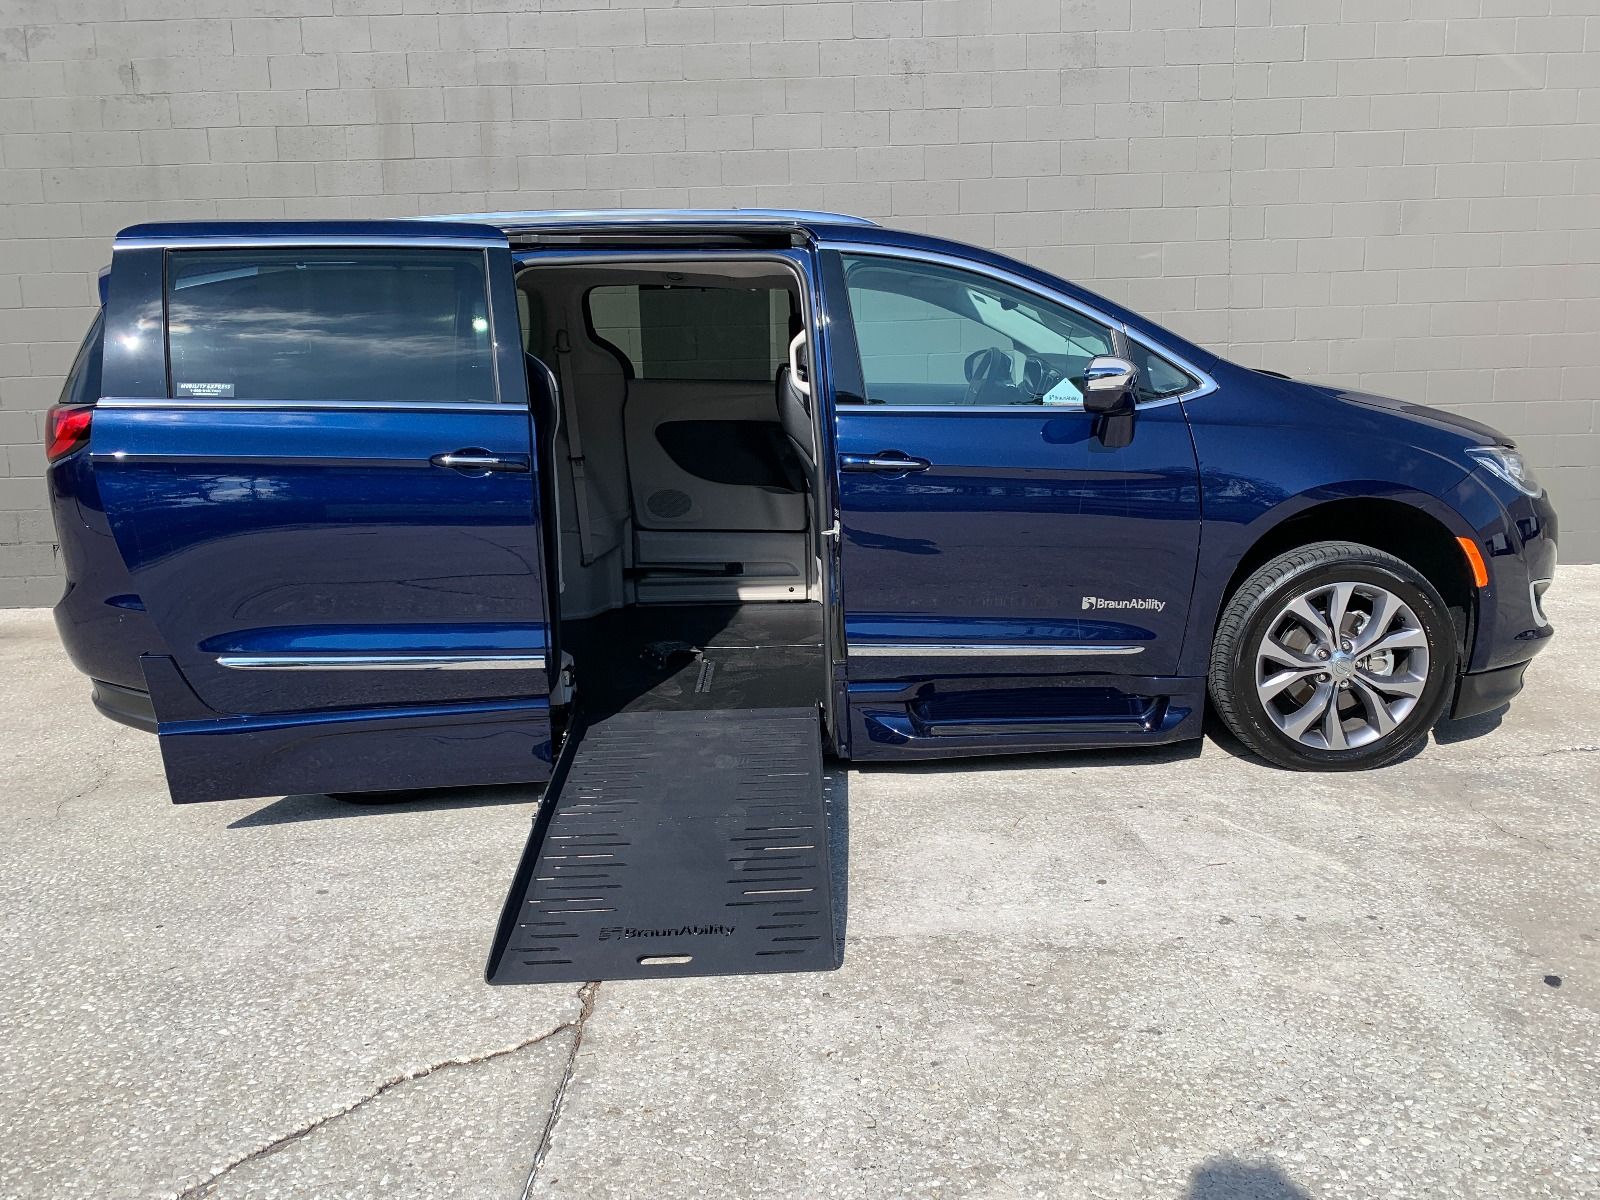 Blue 2020 Chrysler Pacifica wheelchair van with ramp deployed from passenger sliding door.